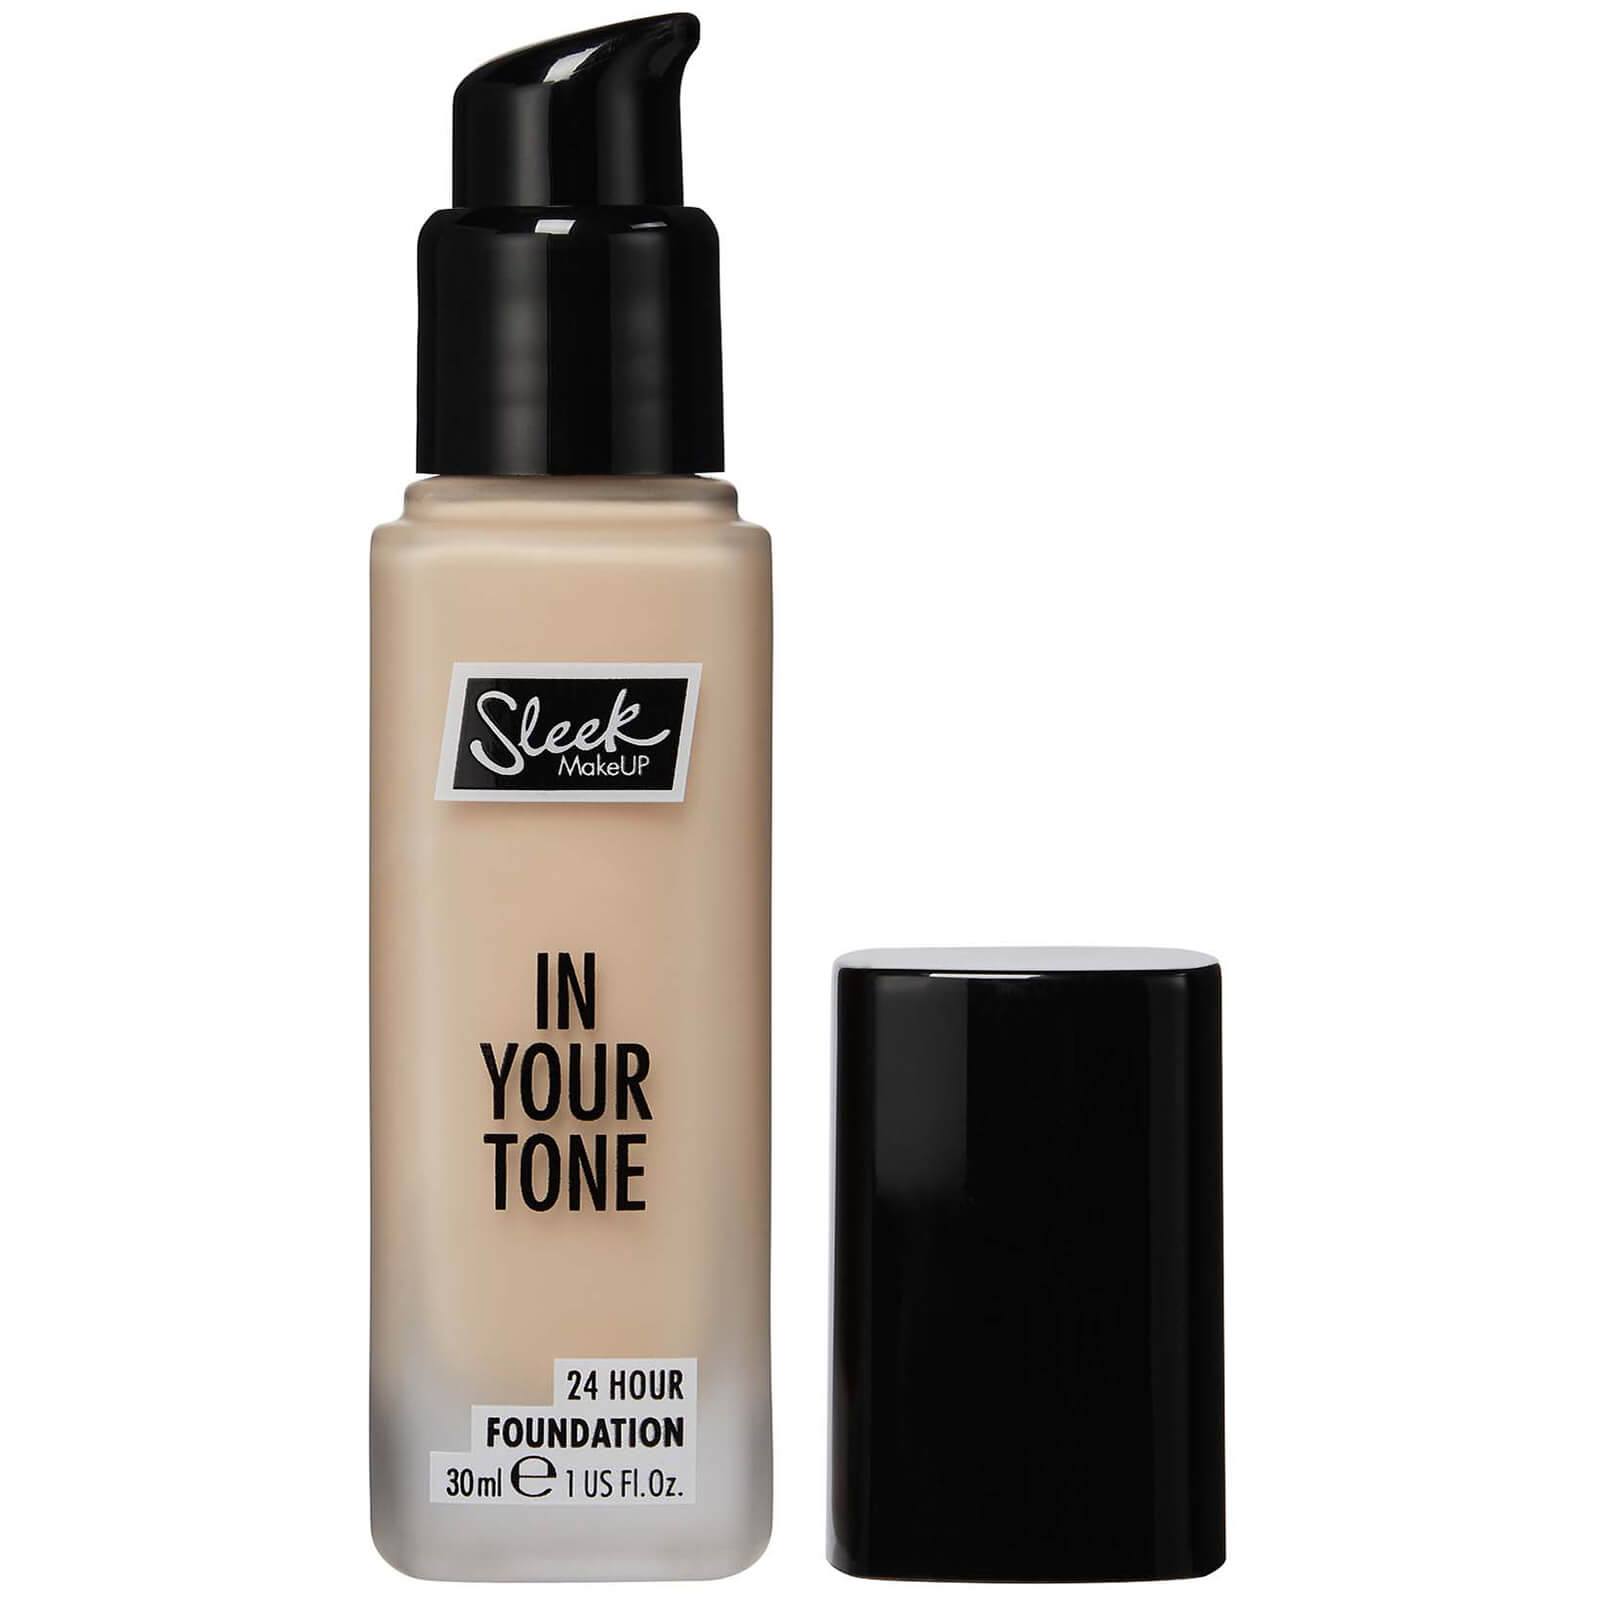 Sleek MakeUP in Your Tone 24 Hour Foundation 30ml (Various Shades) - 2N von Sleek MakeUP